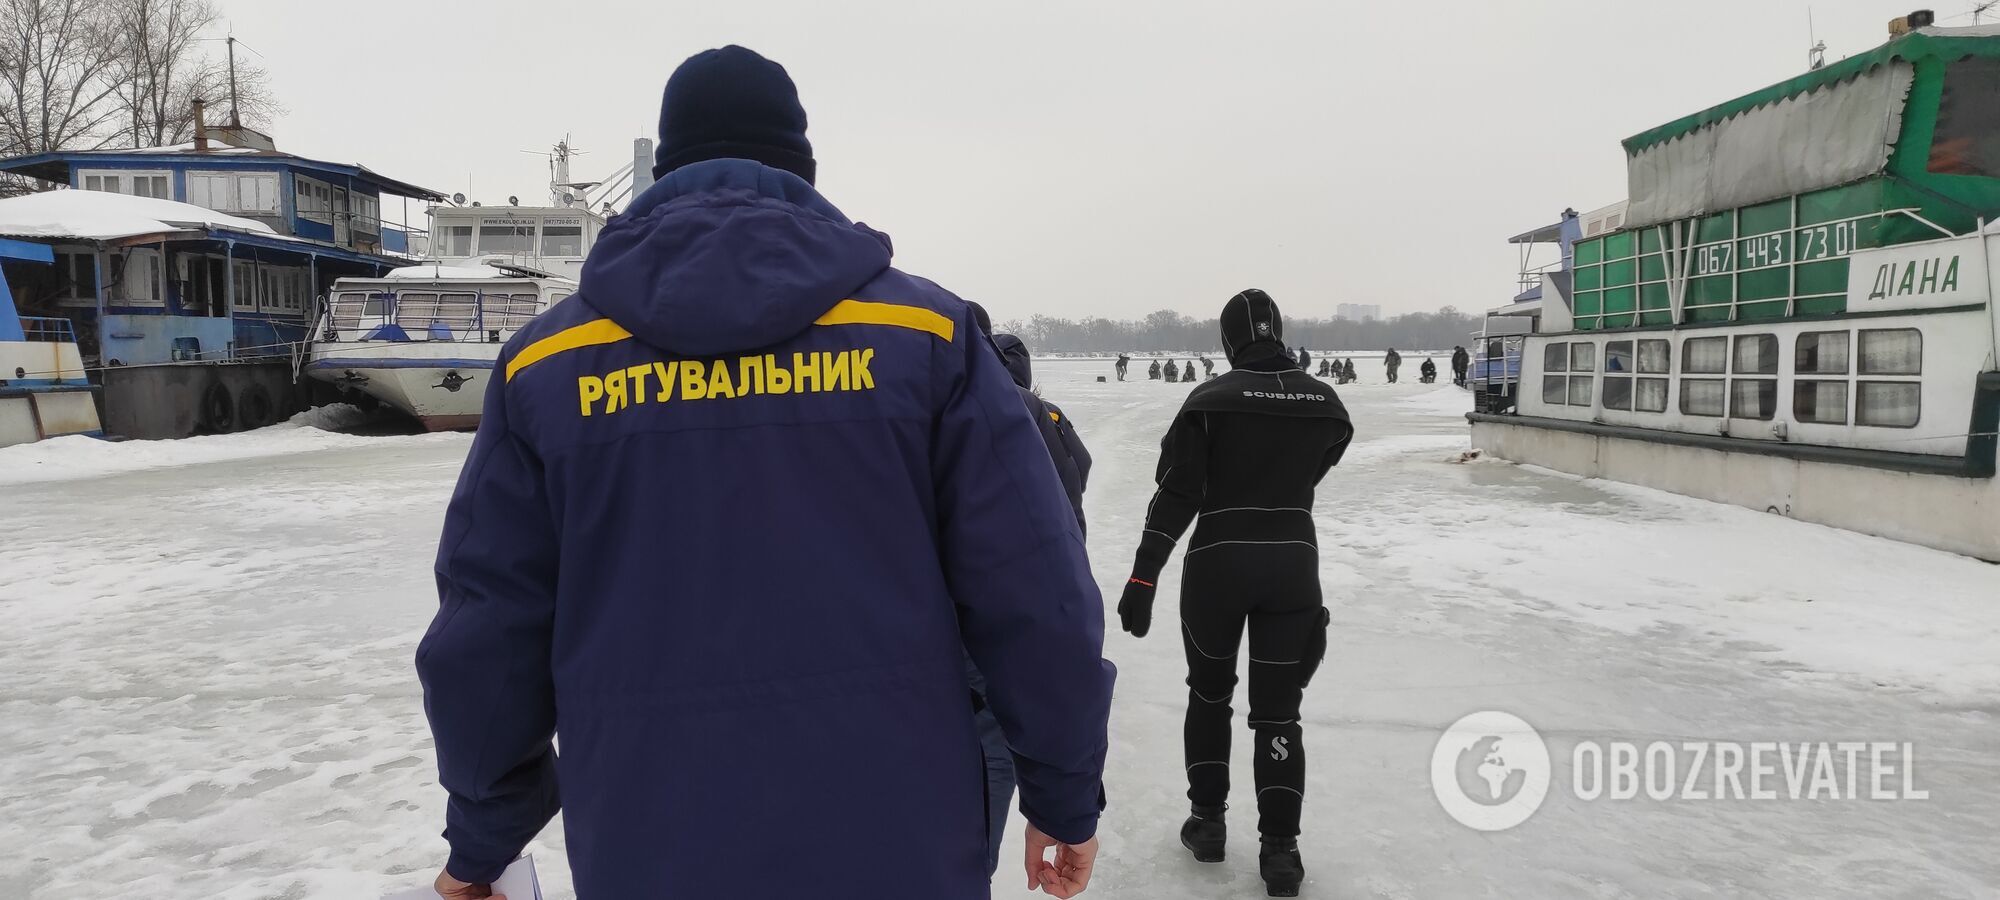 Рятувальники провели профілактичний рейд на льоду